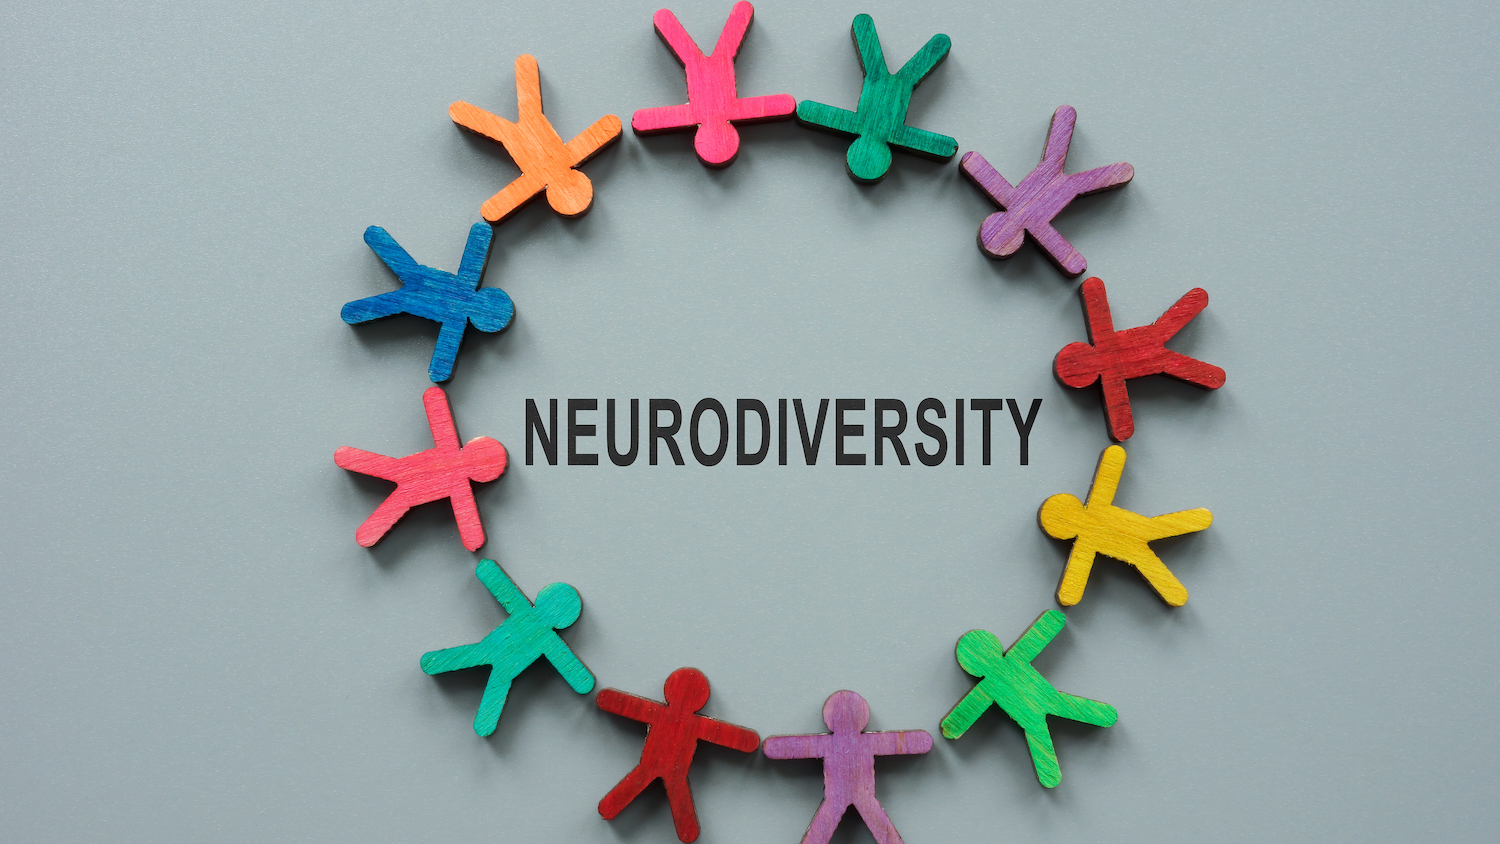 Neurodiversity (Designer491, dreamstime.com)